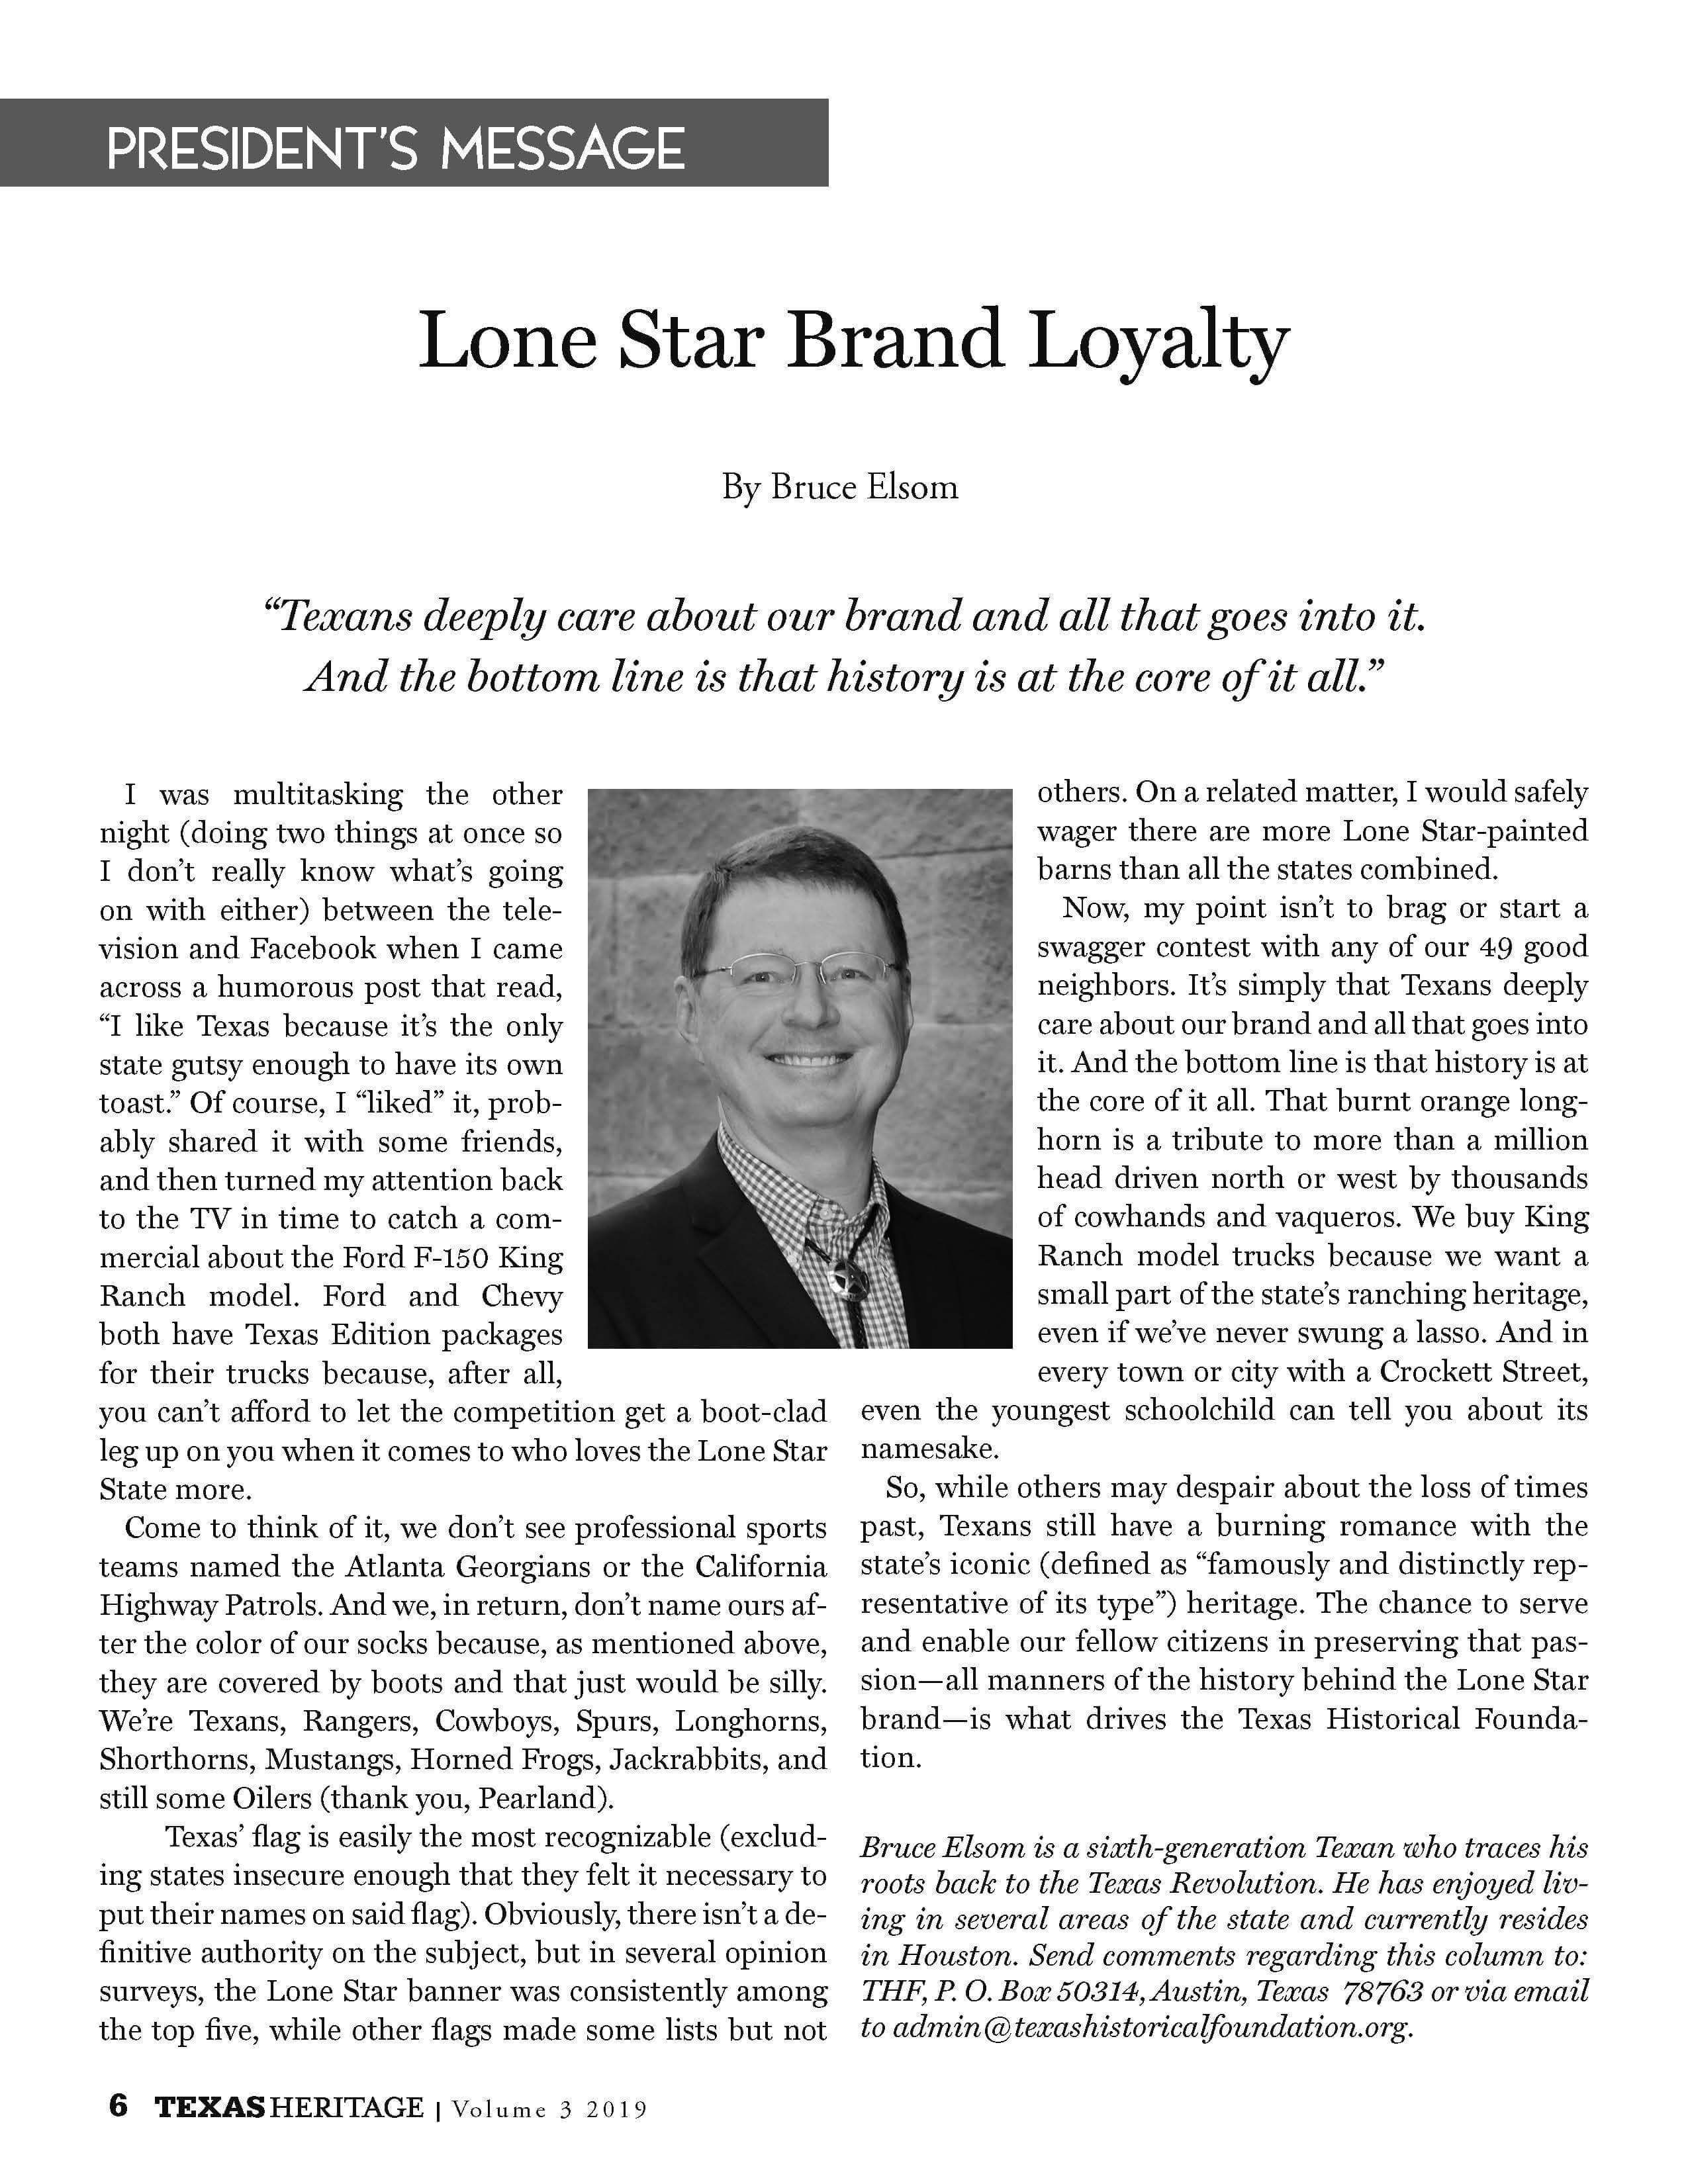 Lone Star Brand Loyalty